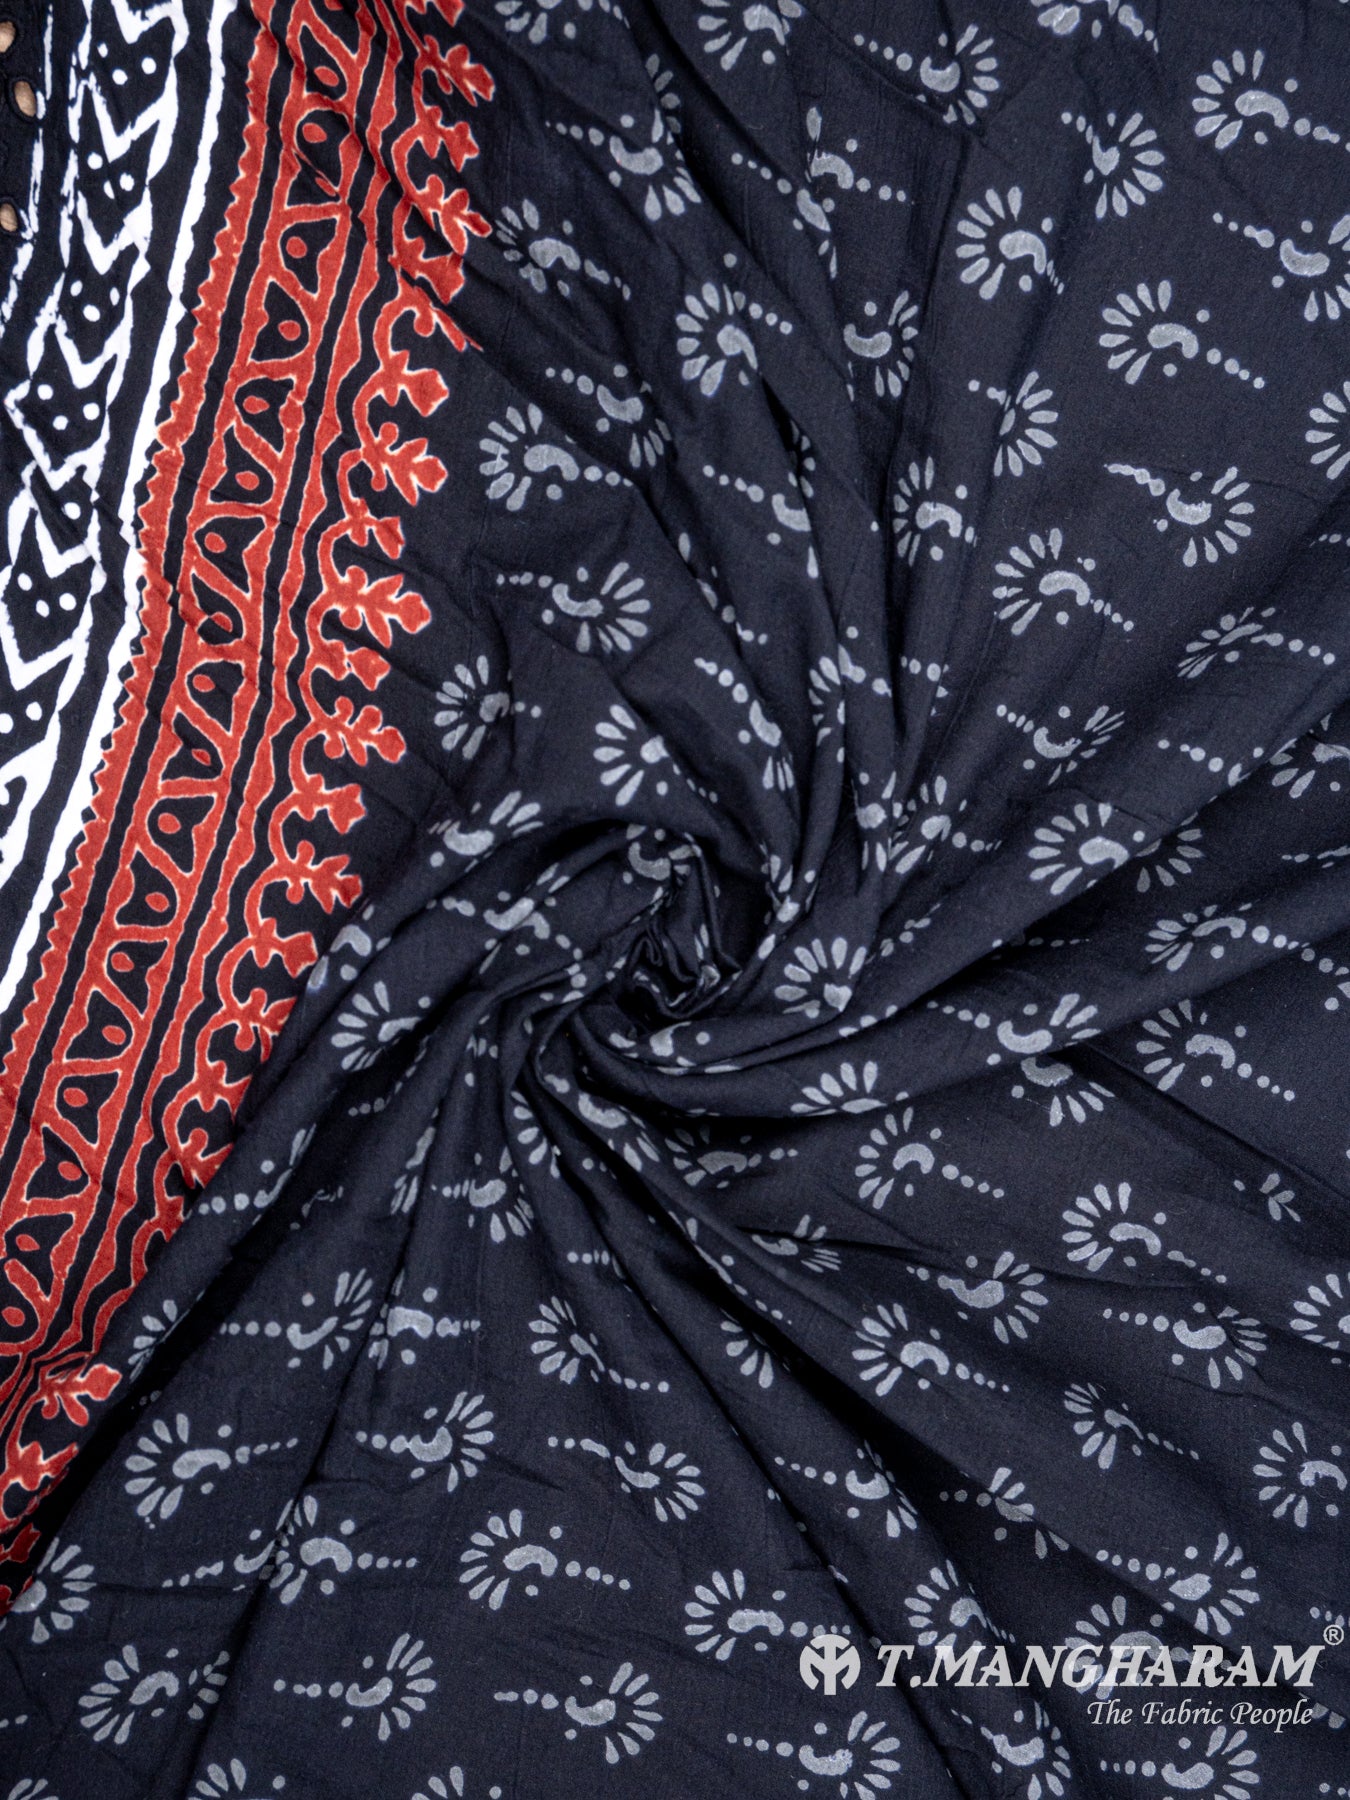 Black Cotton Embroidery Fabric - EB4735 view-1